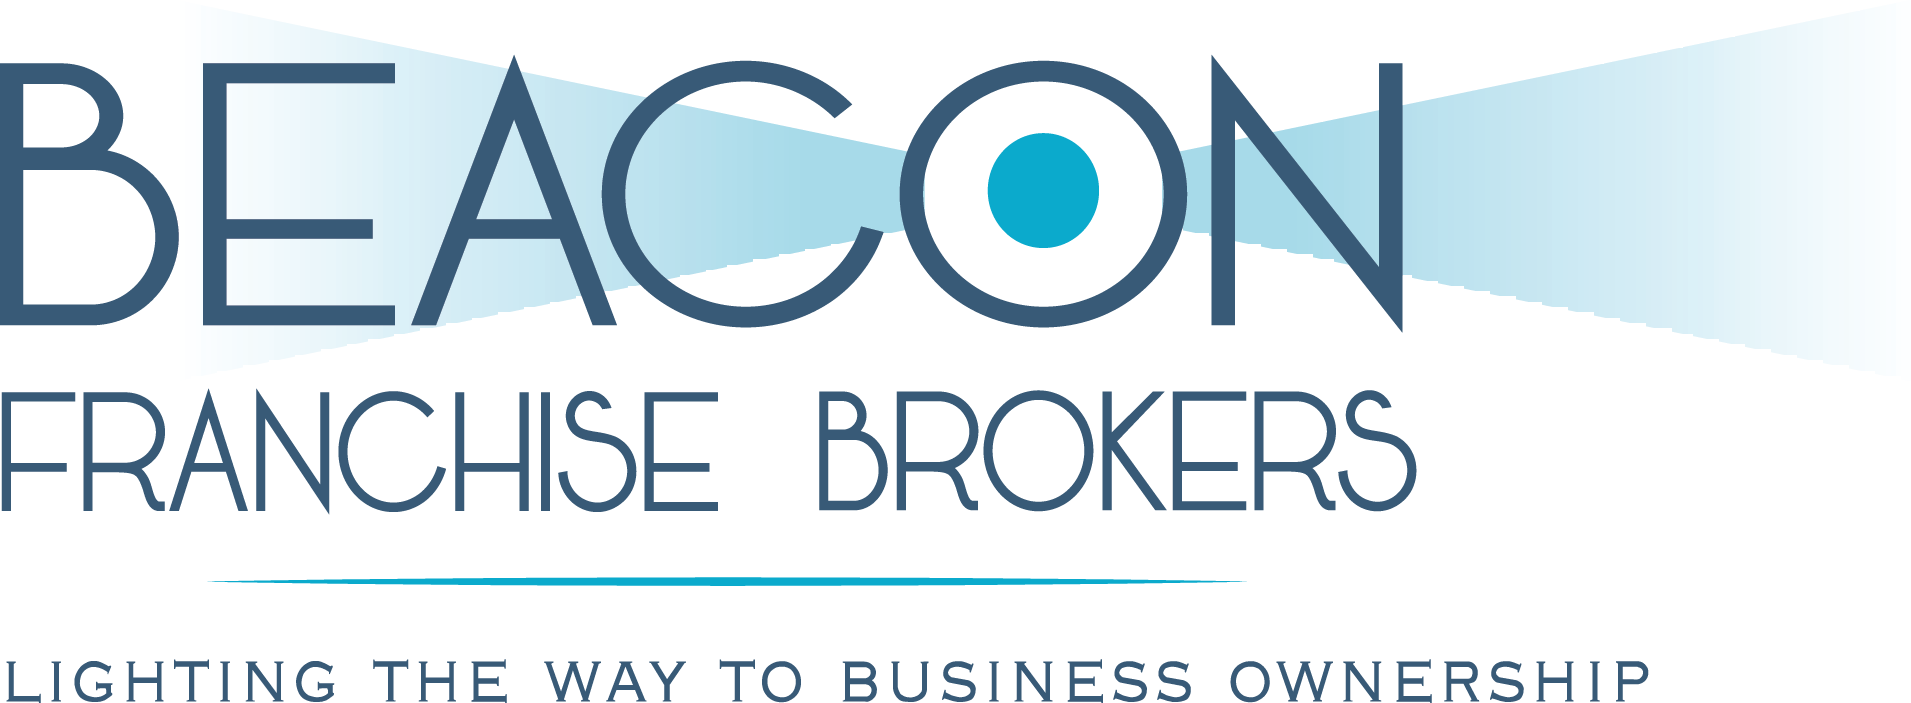 Beacon Franchise Brokers